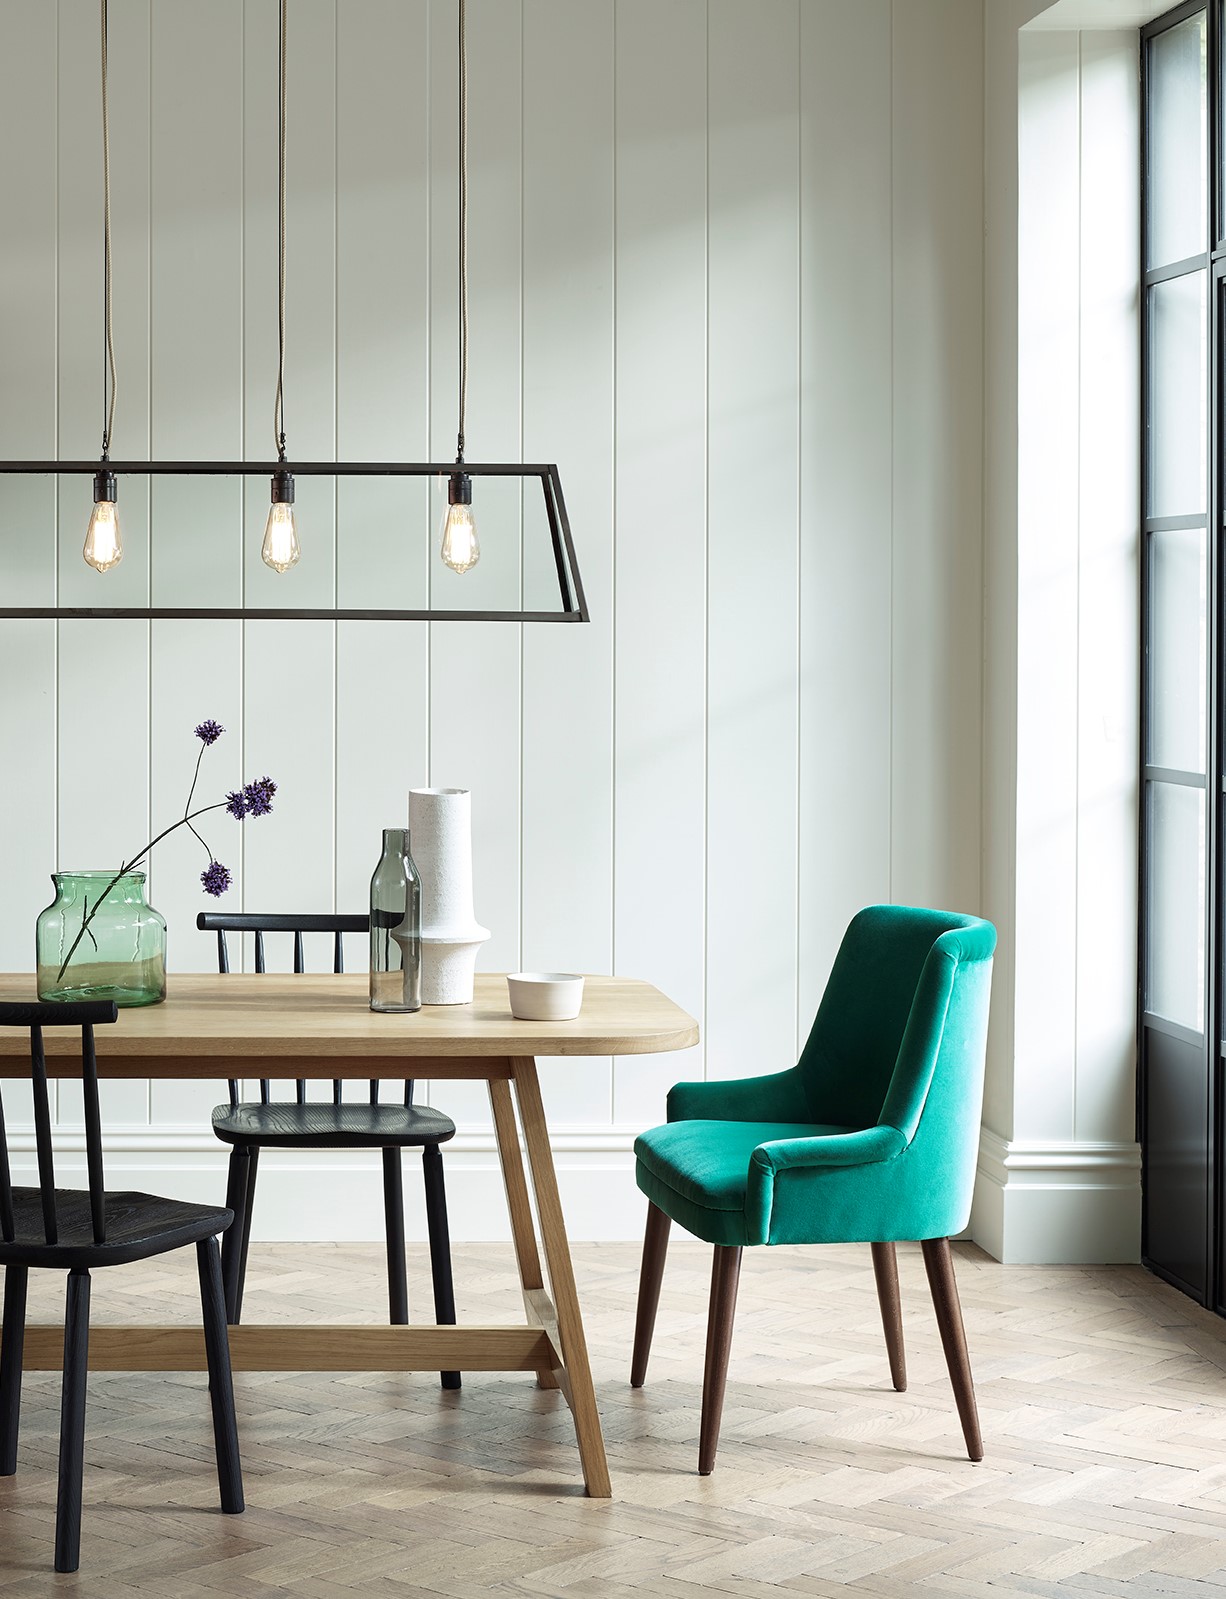 Dining room lighting ideas – 18 ideas to illuminate your dining ...